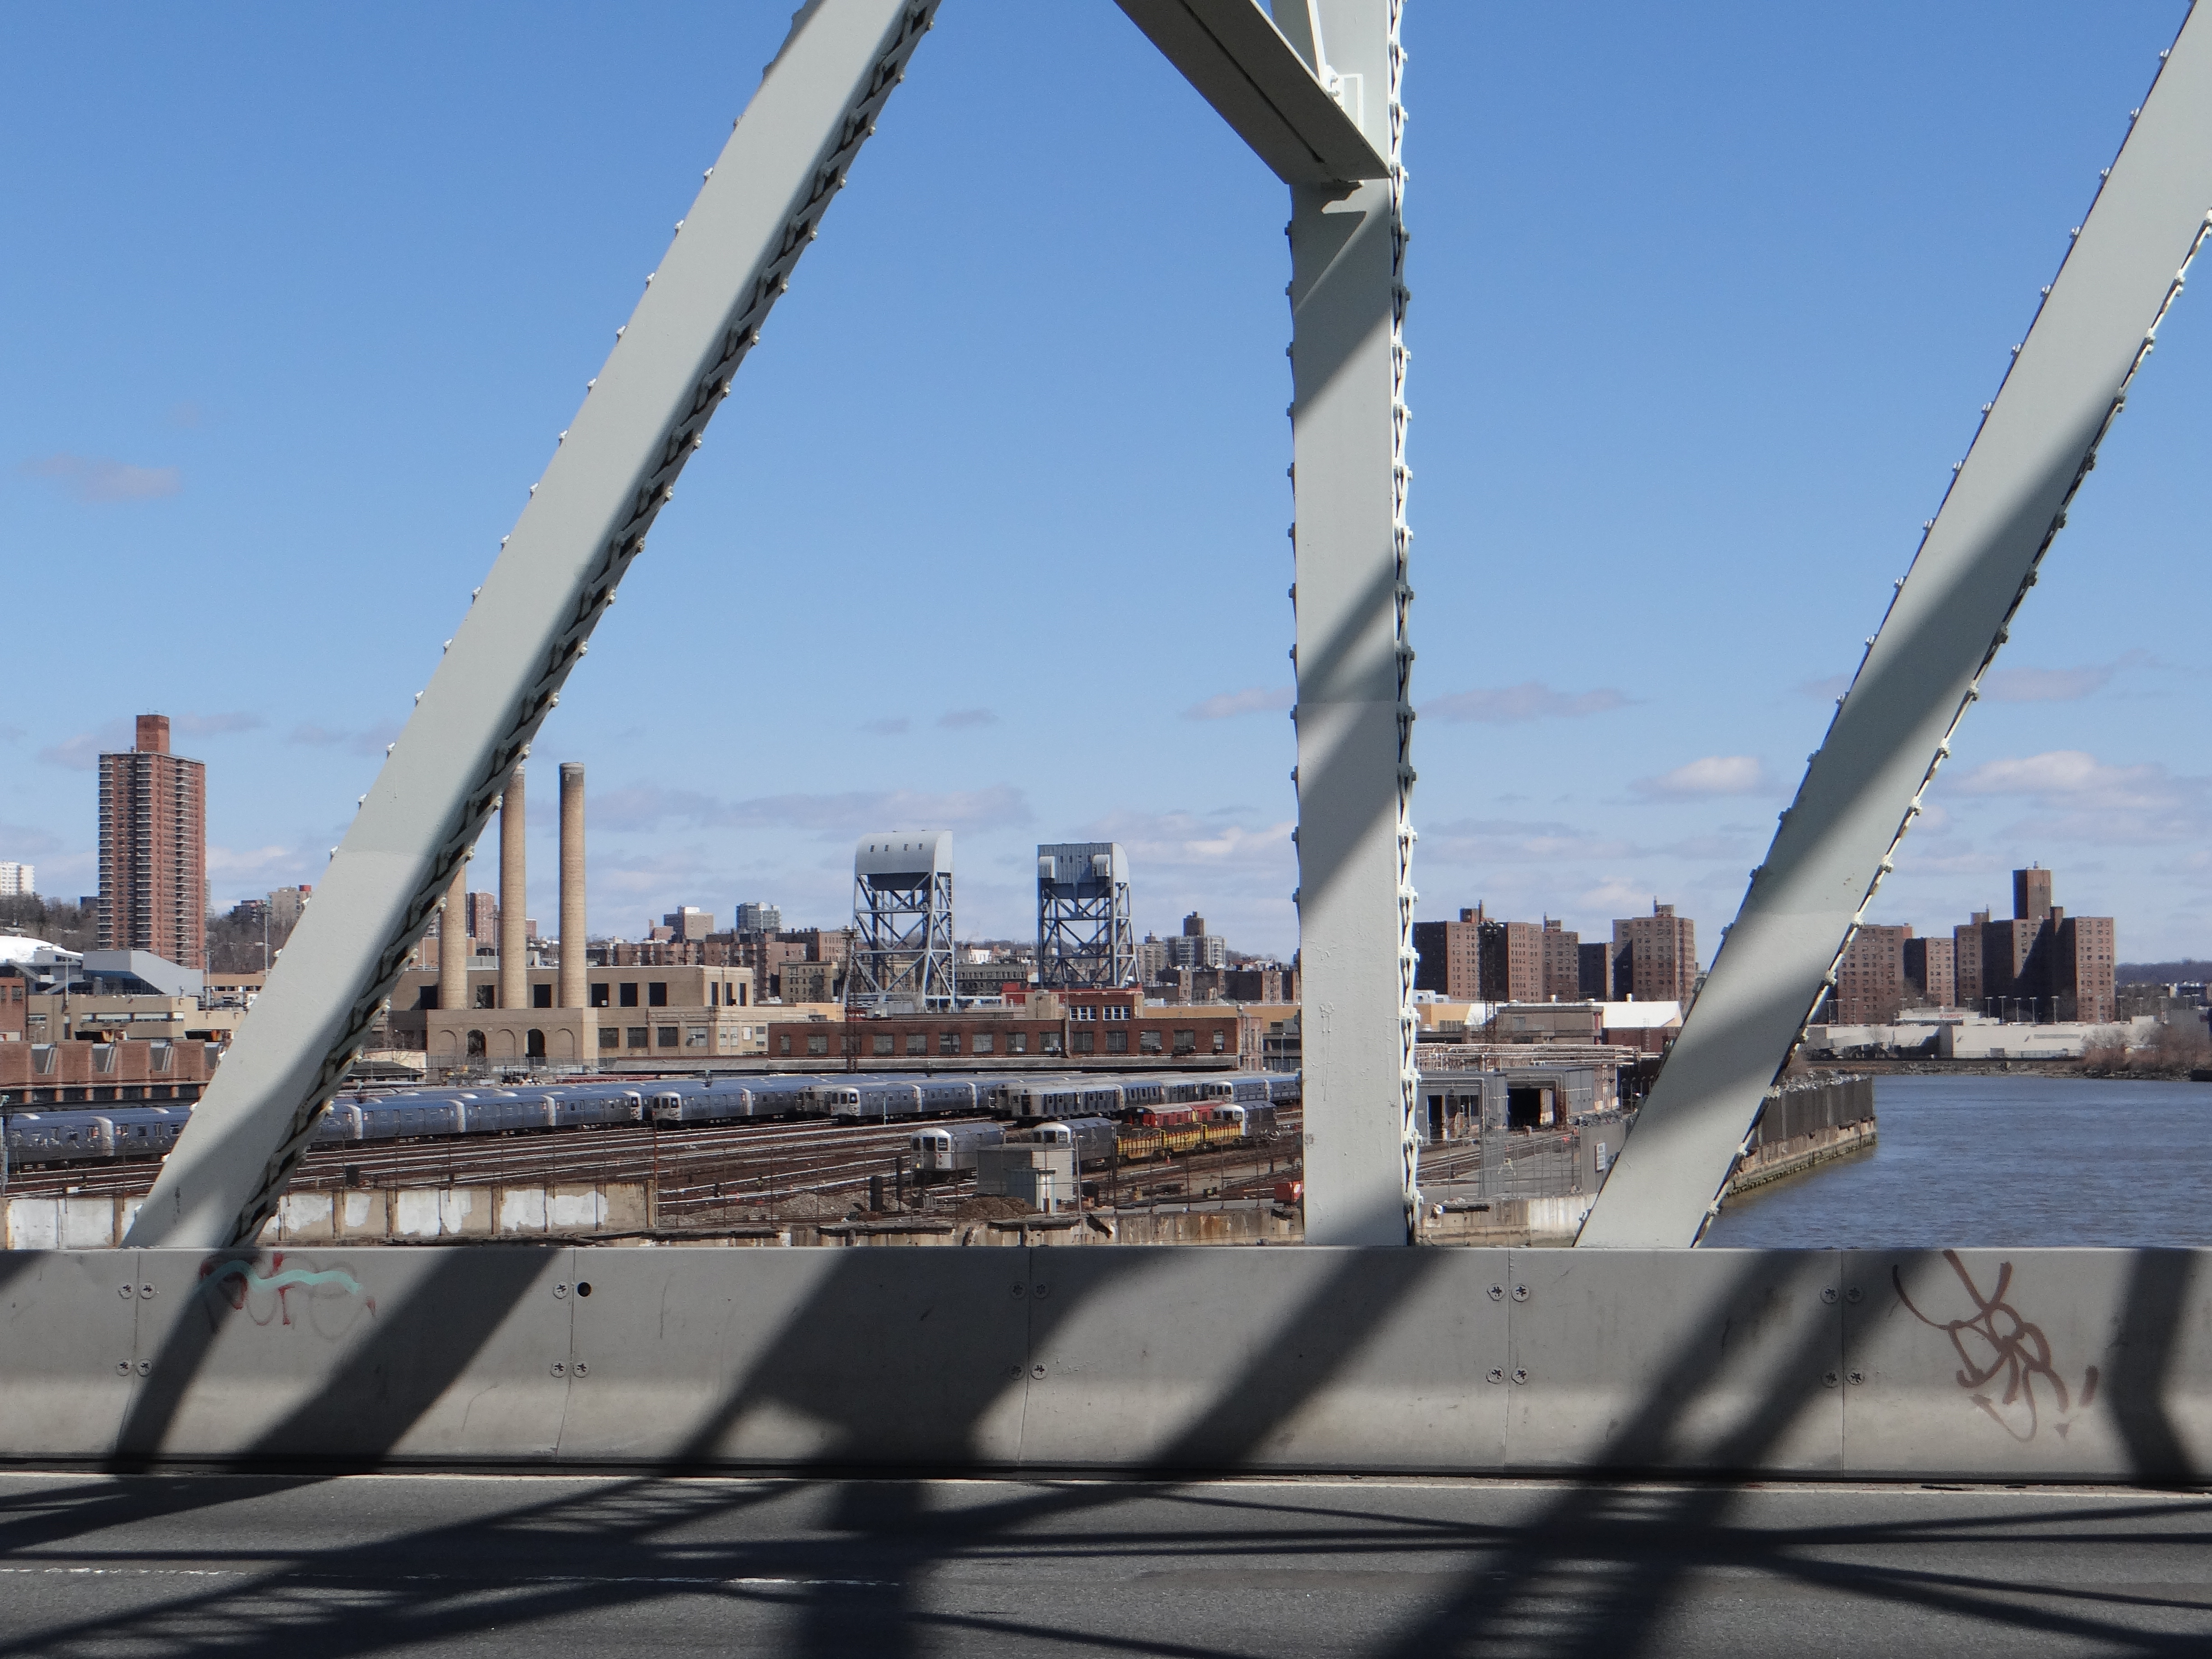 View of Broadway Bridge through girders